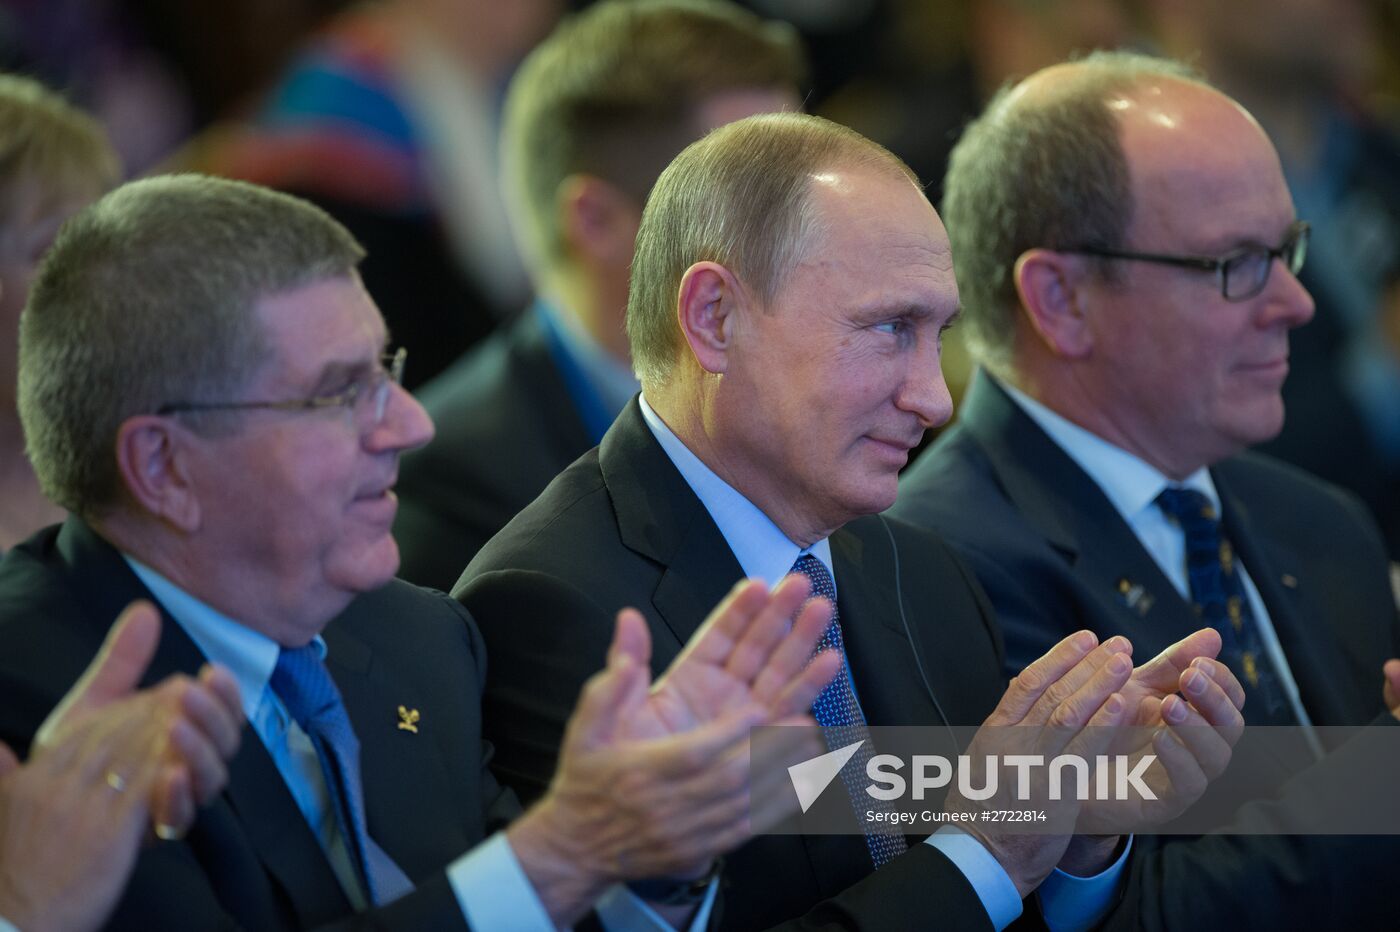 President Vladimir Putin attends 1st World Olympians Forum held by the World Olympians Association